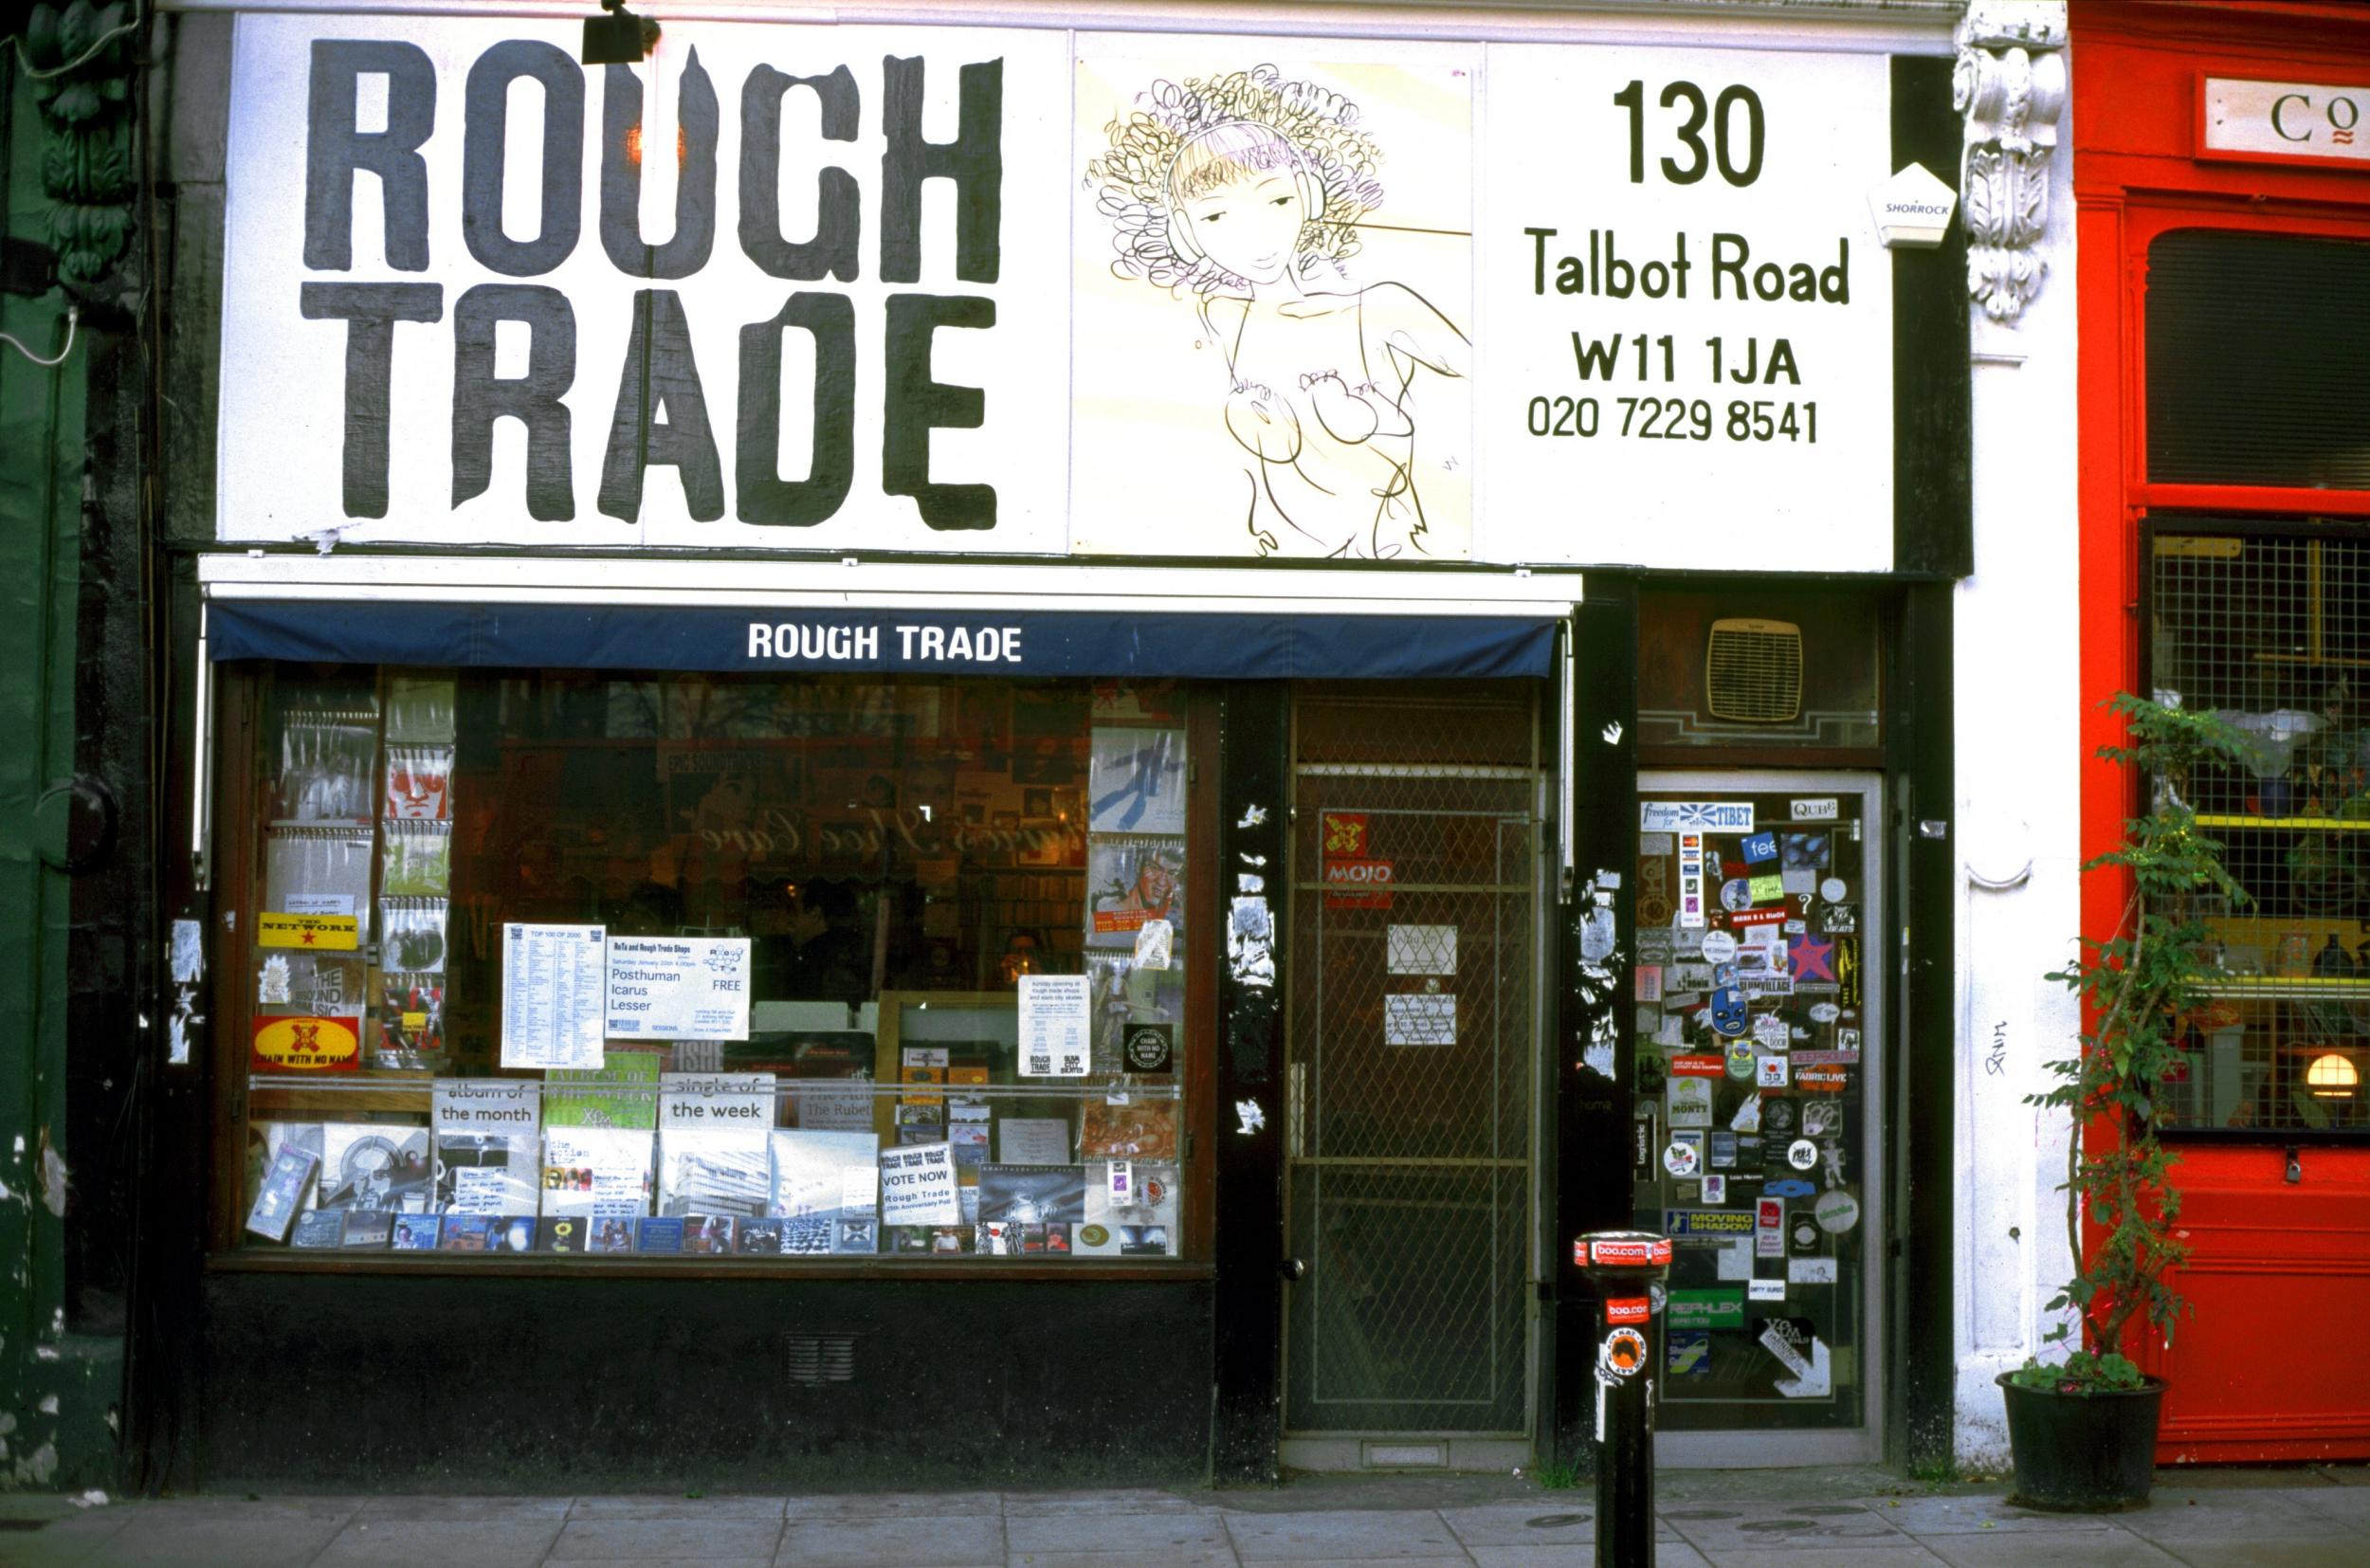 Rough Trade, 130 Talbot Road, London W11